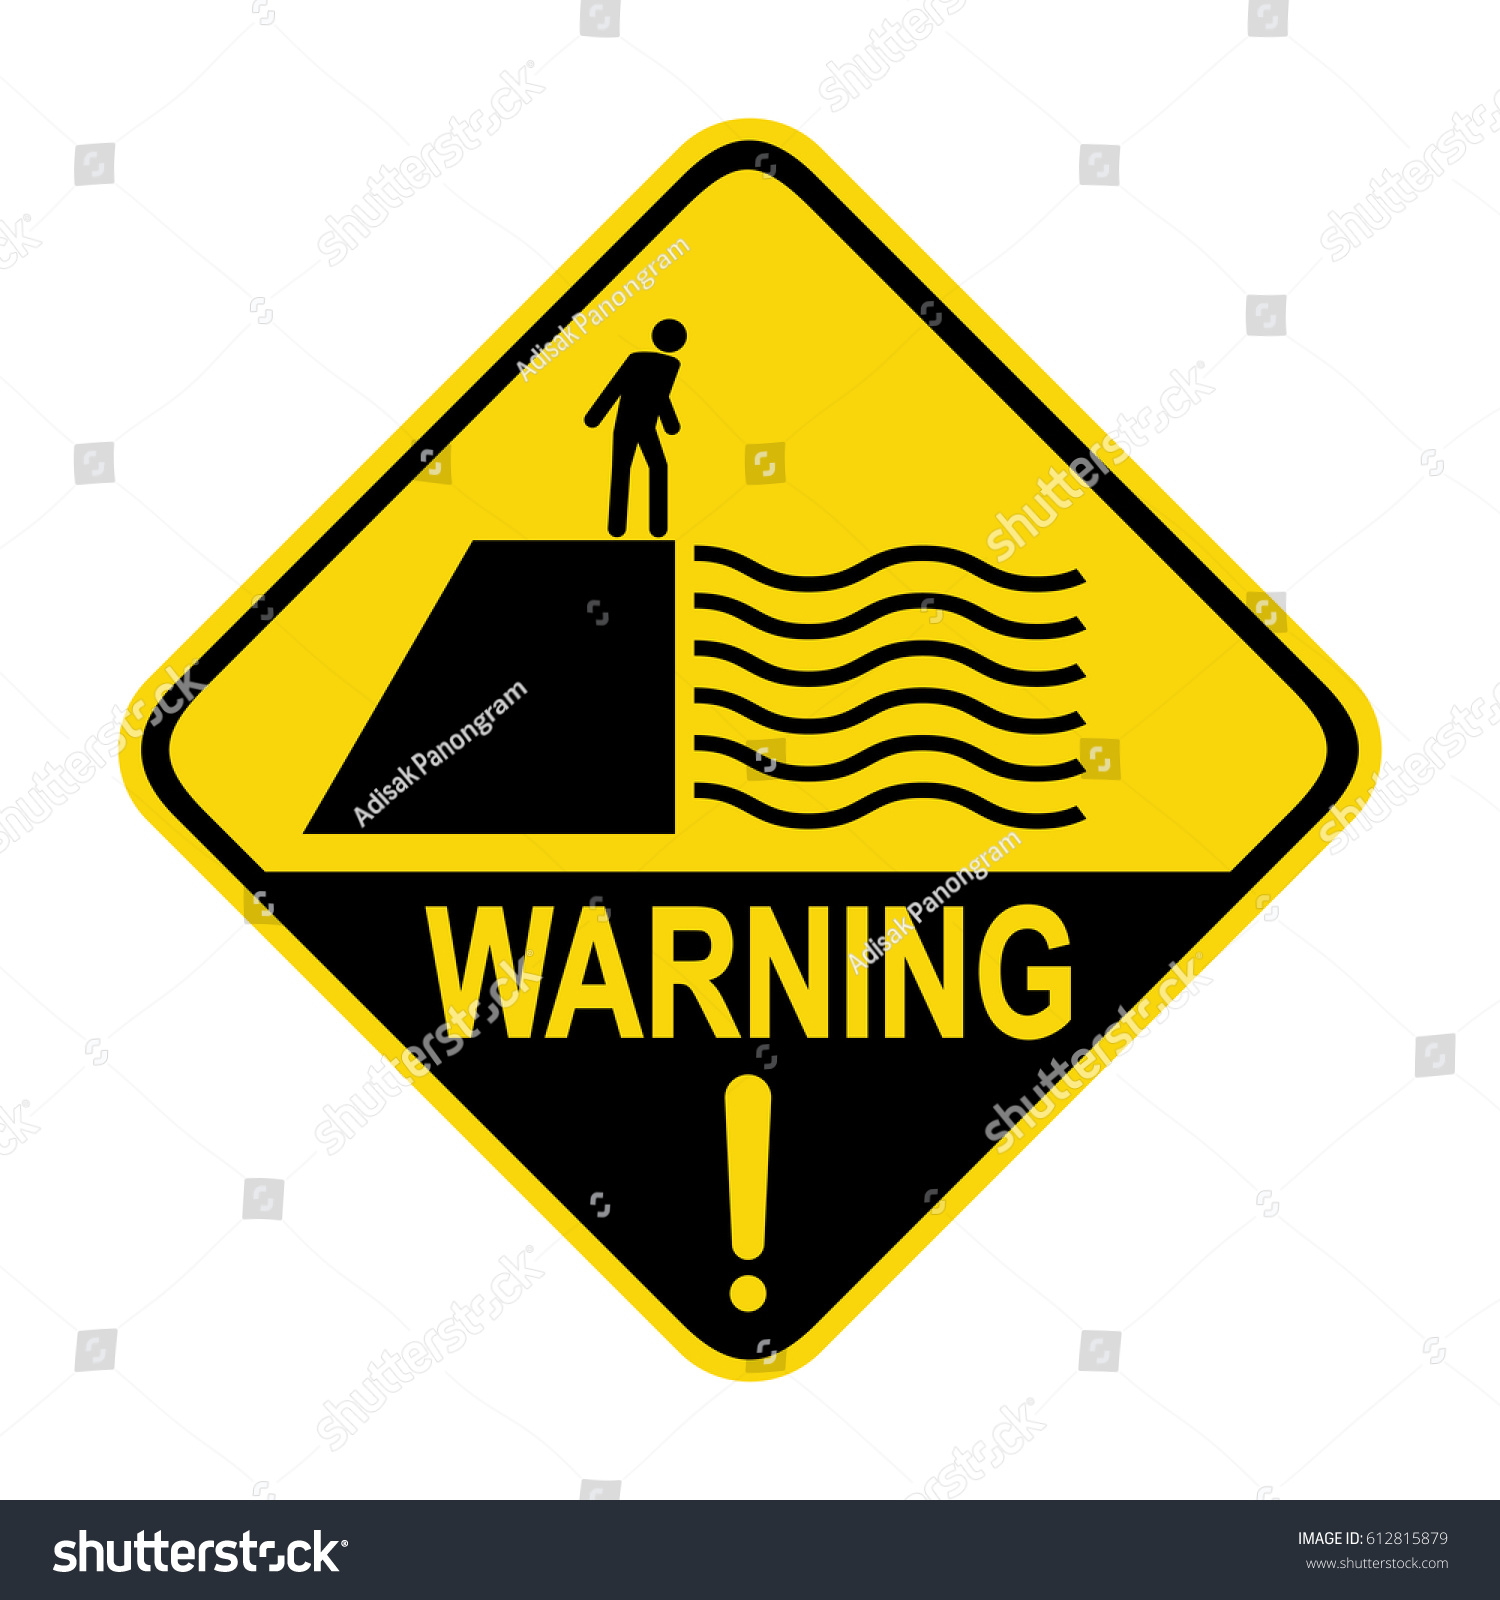 Warning deep water sign 